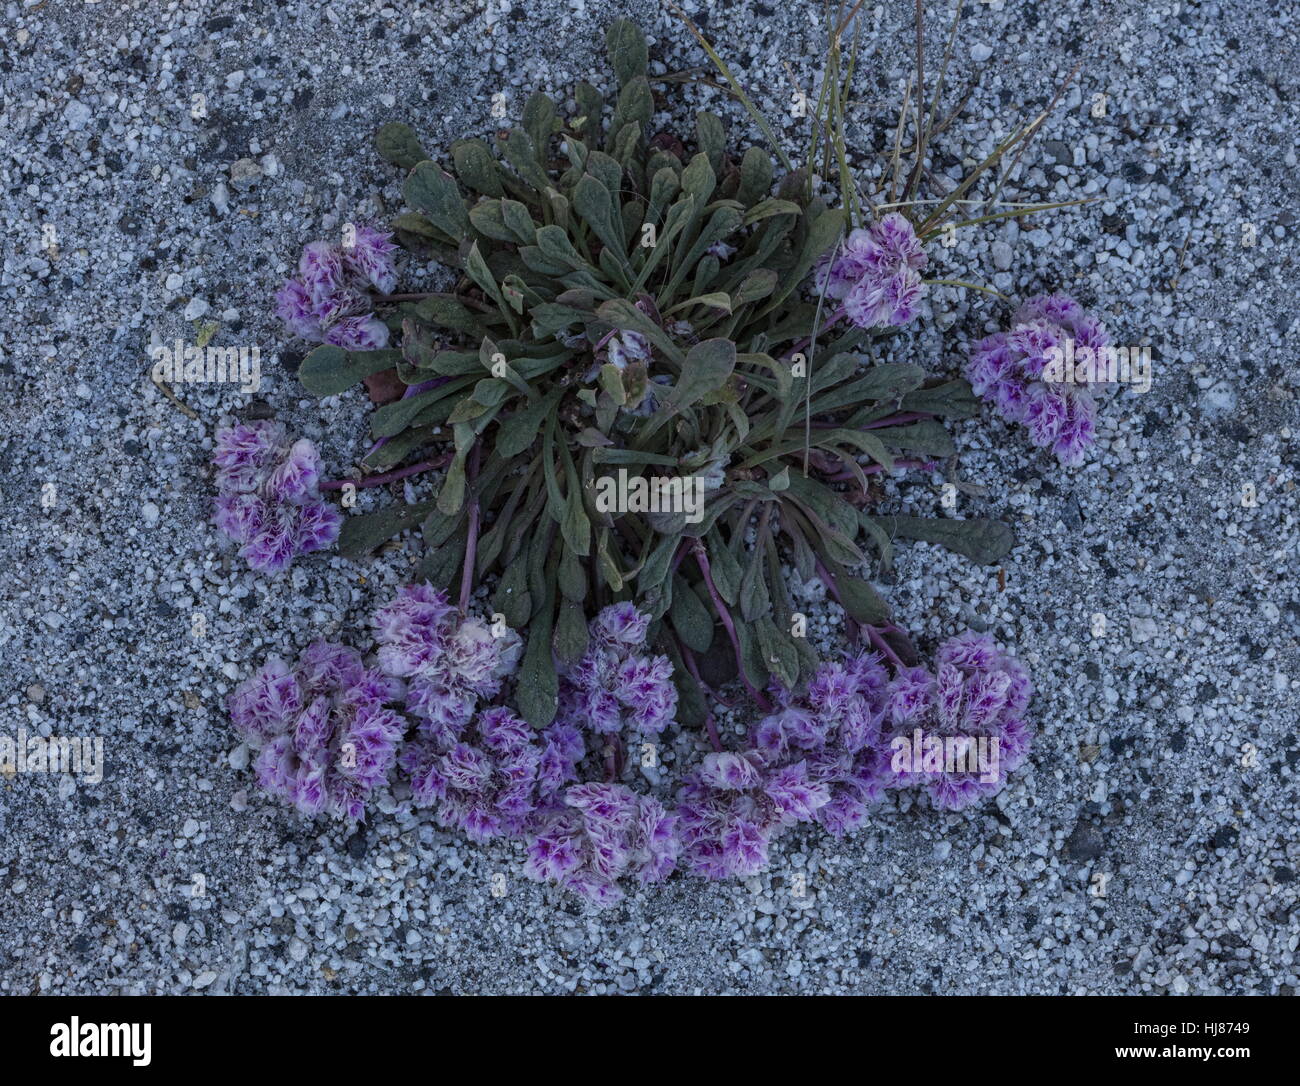 Mount Hood pussypaws, Cistanthe umbellata, or Calyptridium umbellatum, in flower on roadside gravel. Yosemite, California. Stock Photo